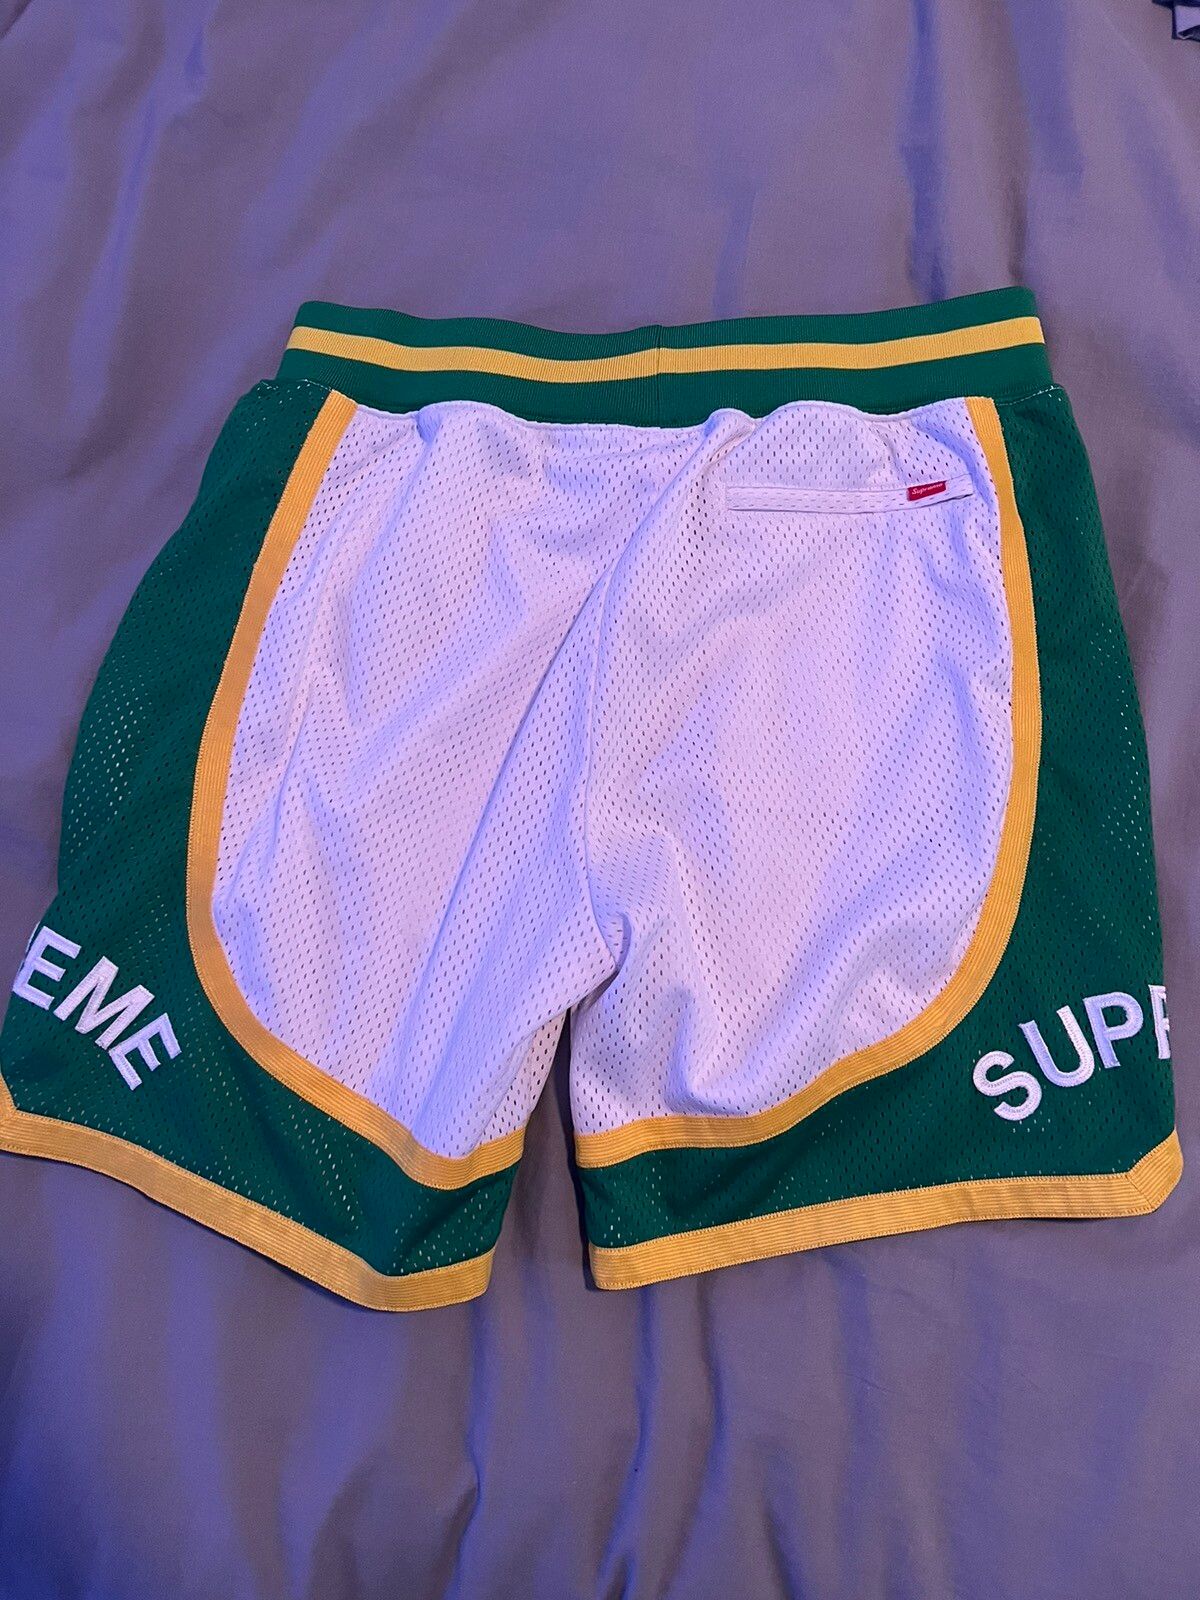 Supreme Supreme Curve Basketball Shorts | Grailed